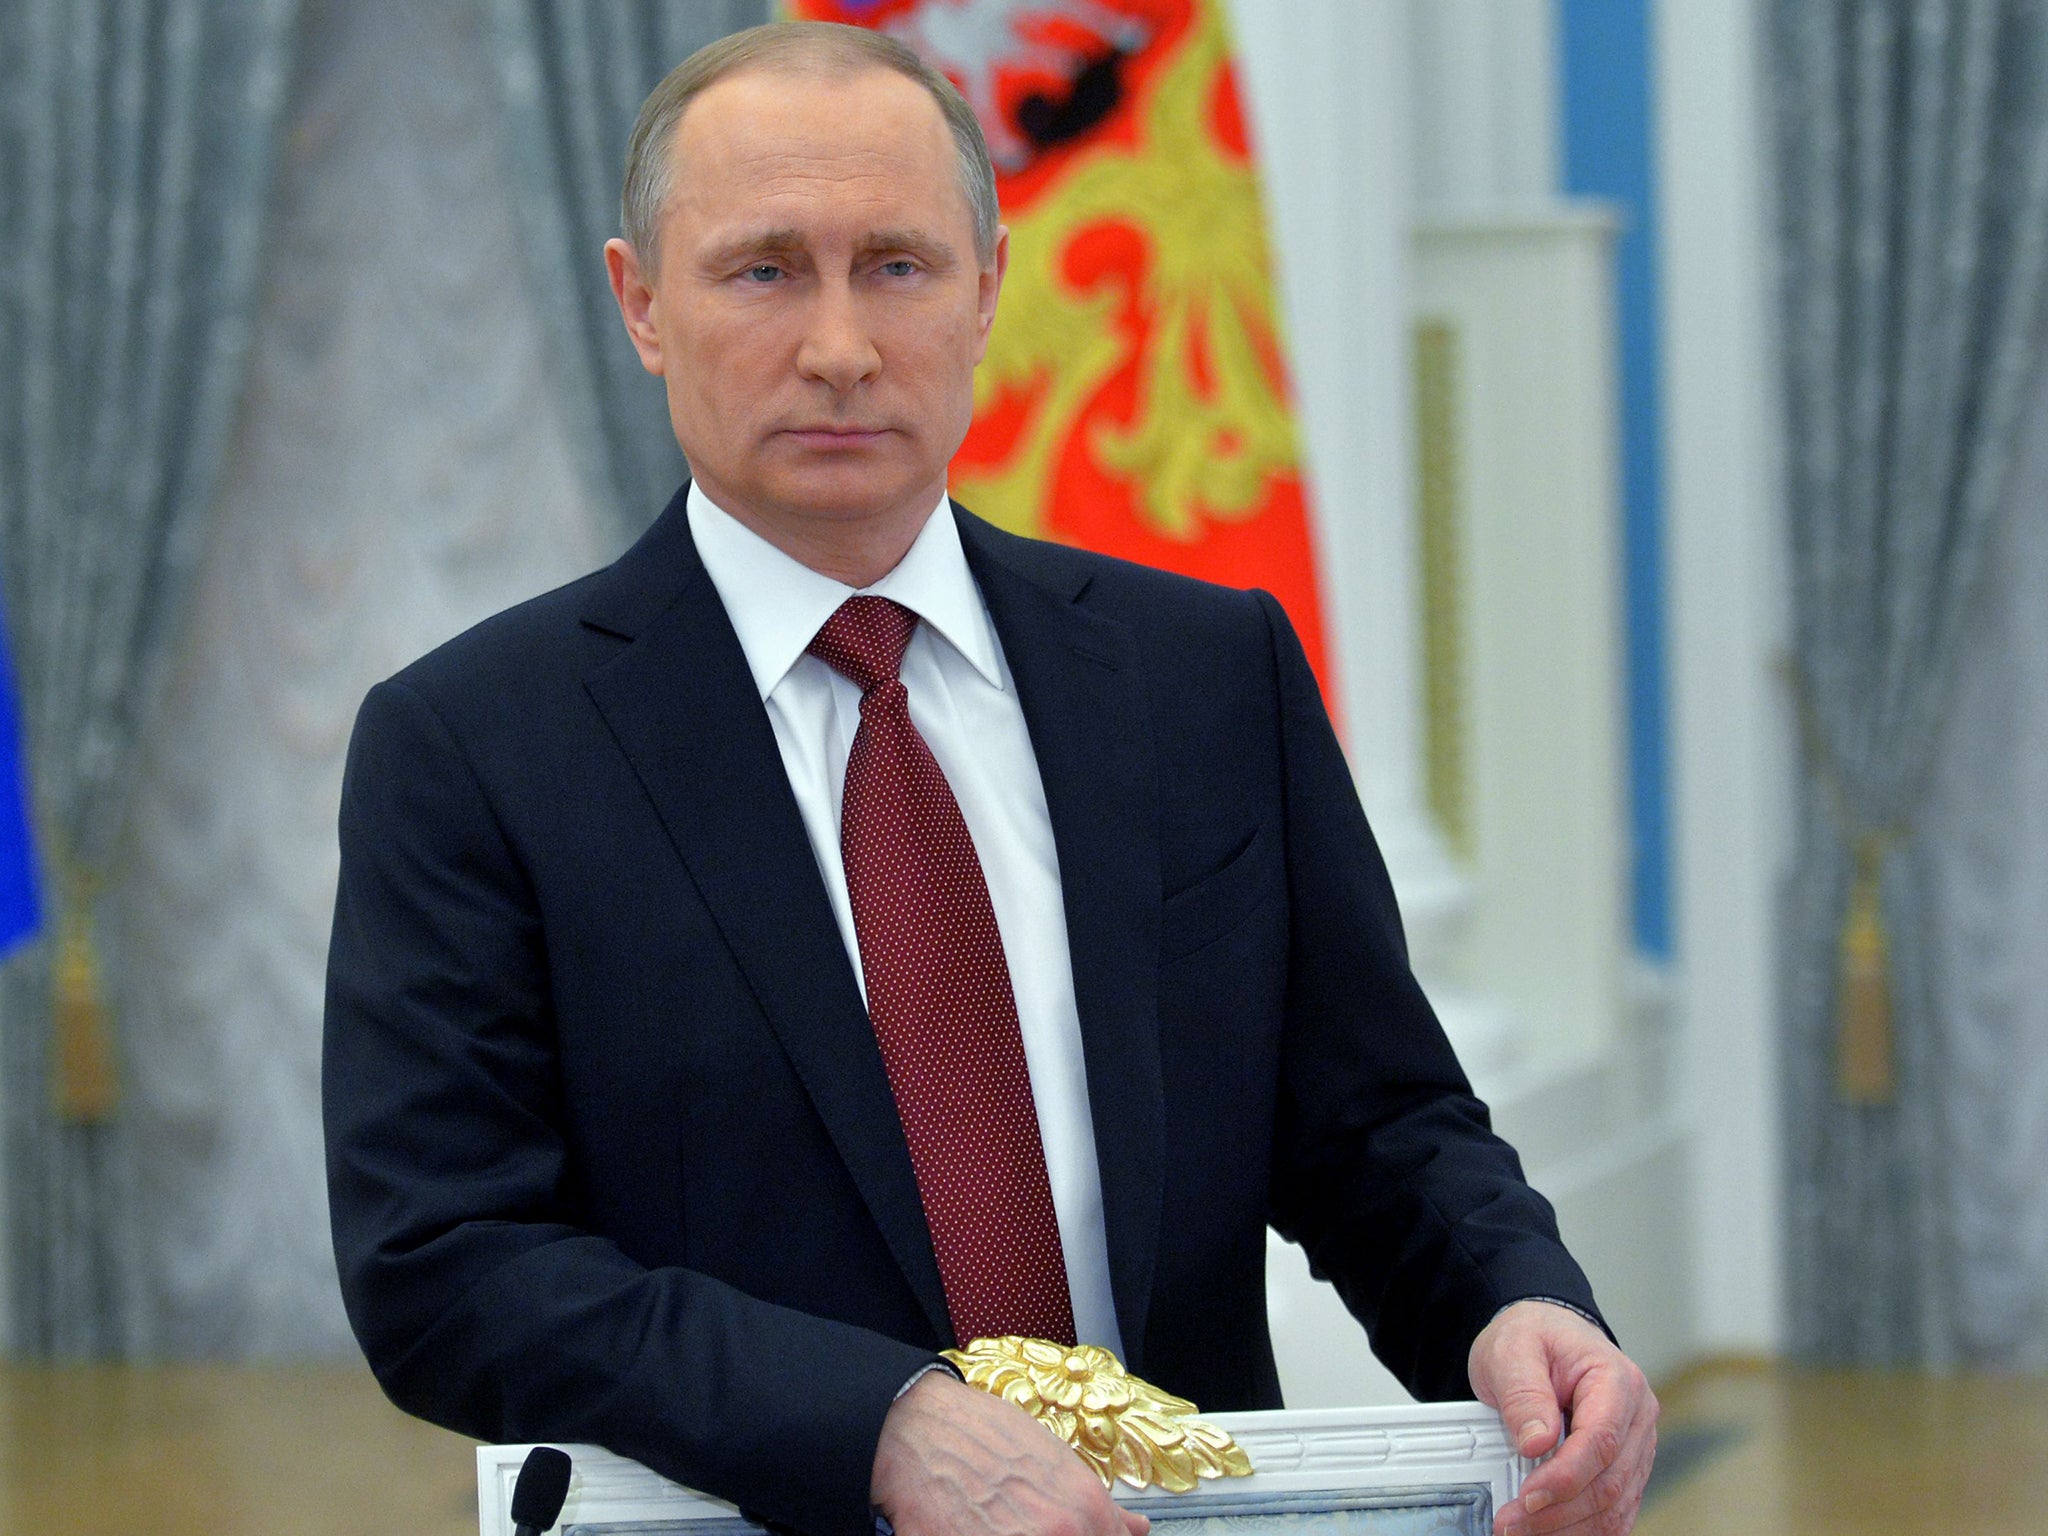 Vladimir Putin said Europe was 'not having an easy time'